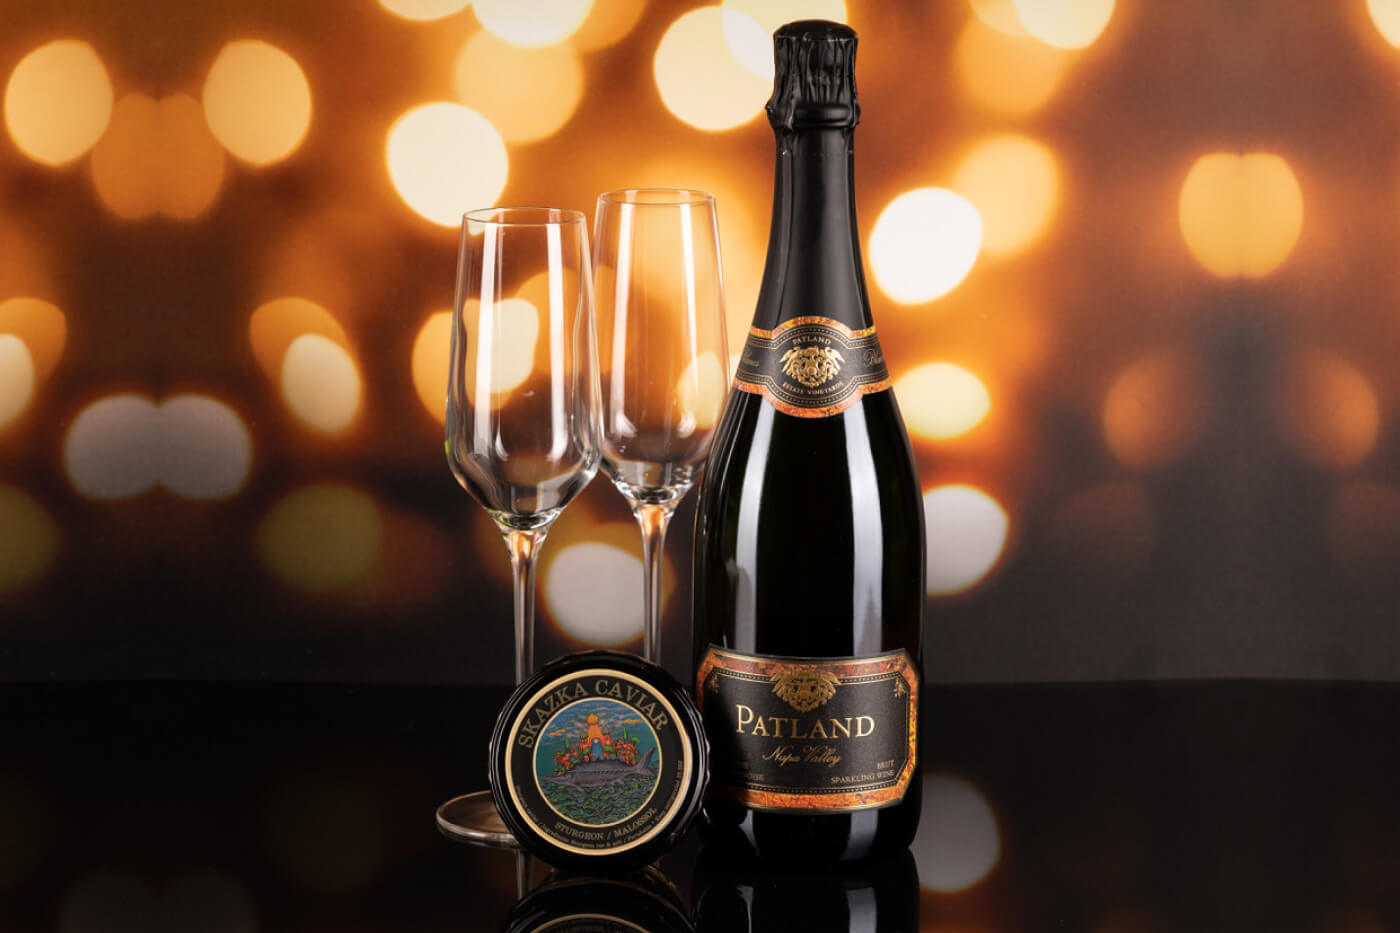 Champagne and caviar